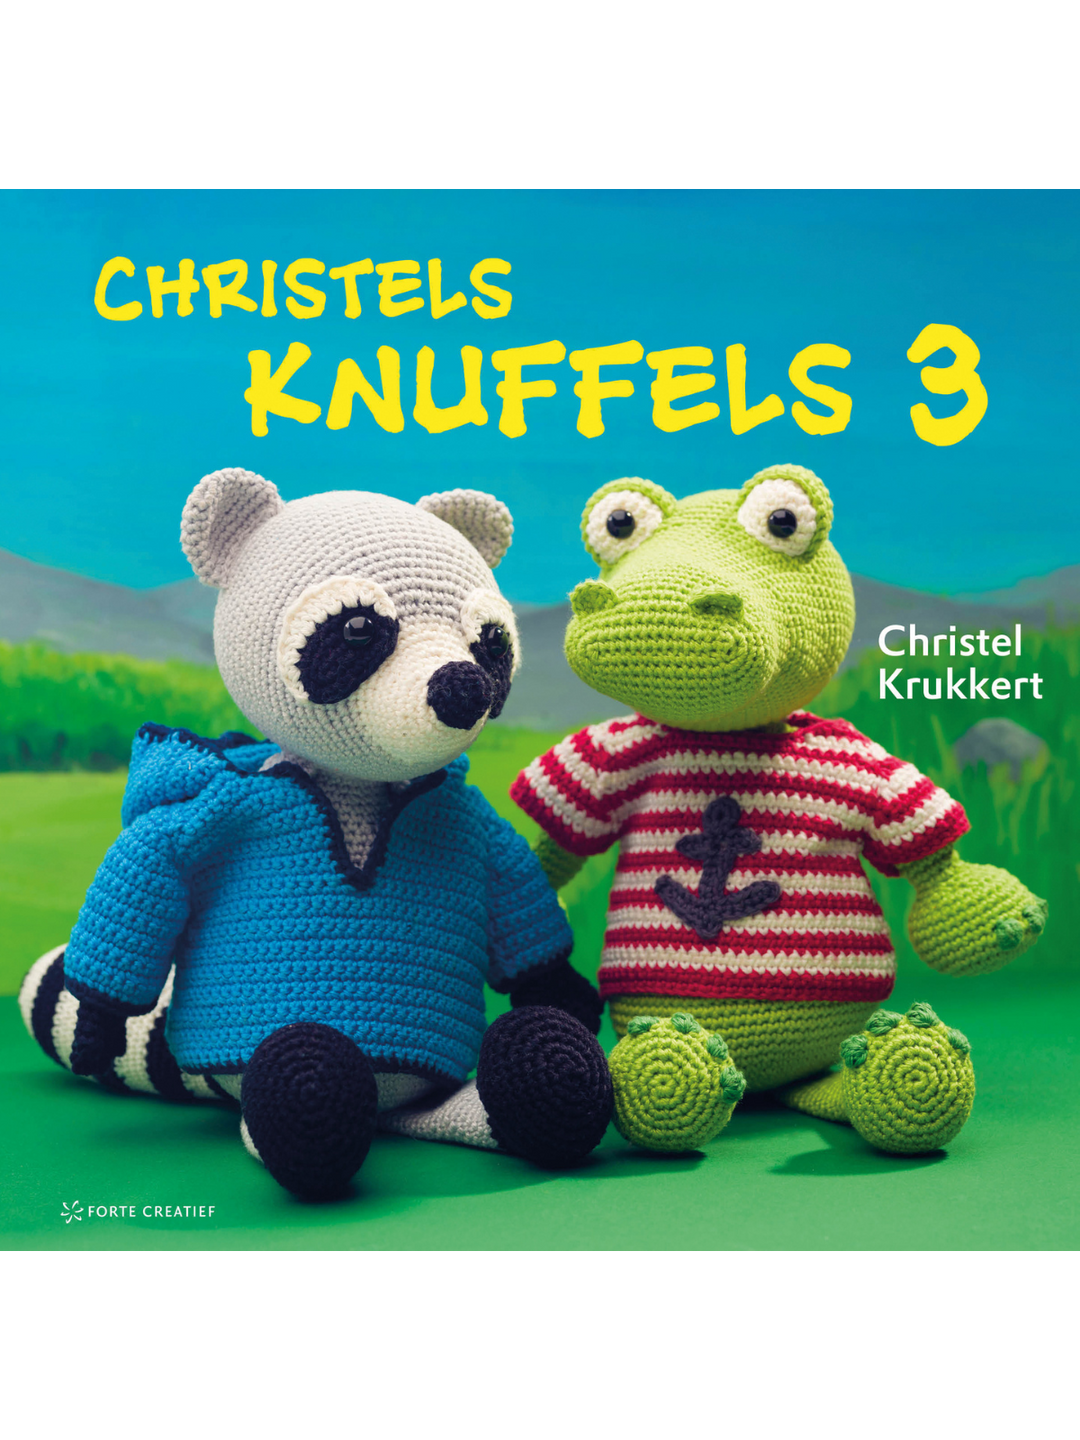 Christels knuffels 3